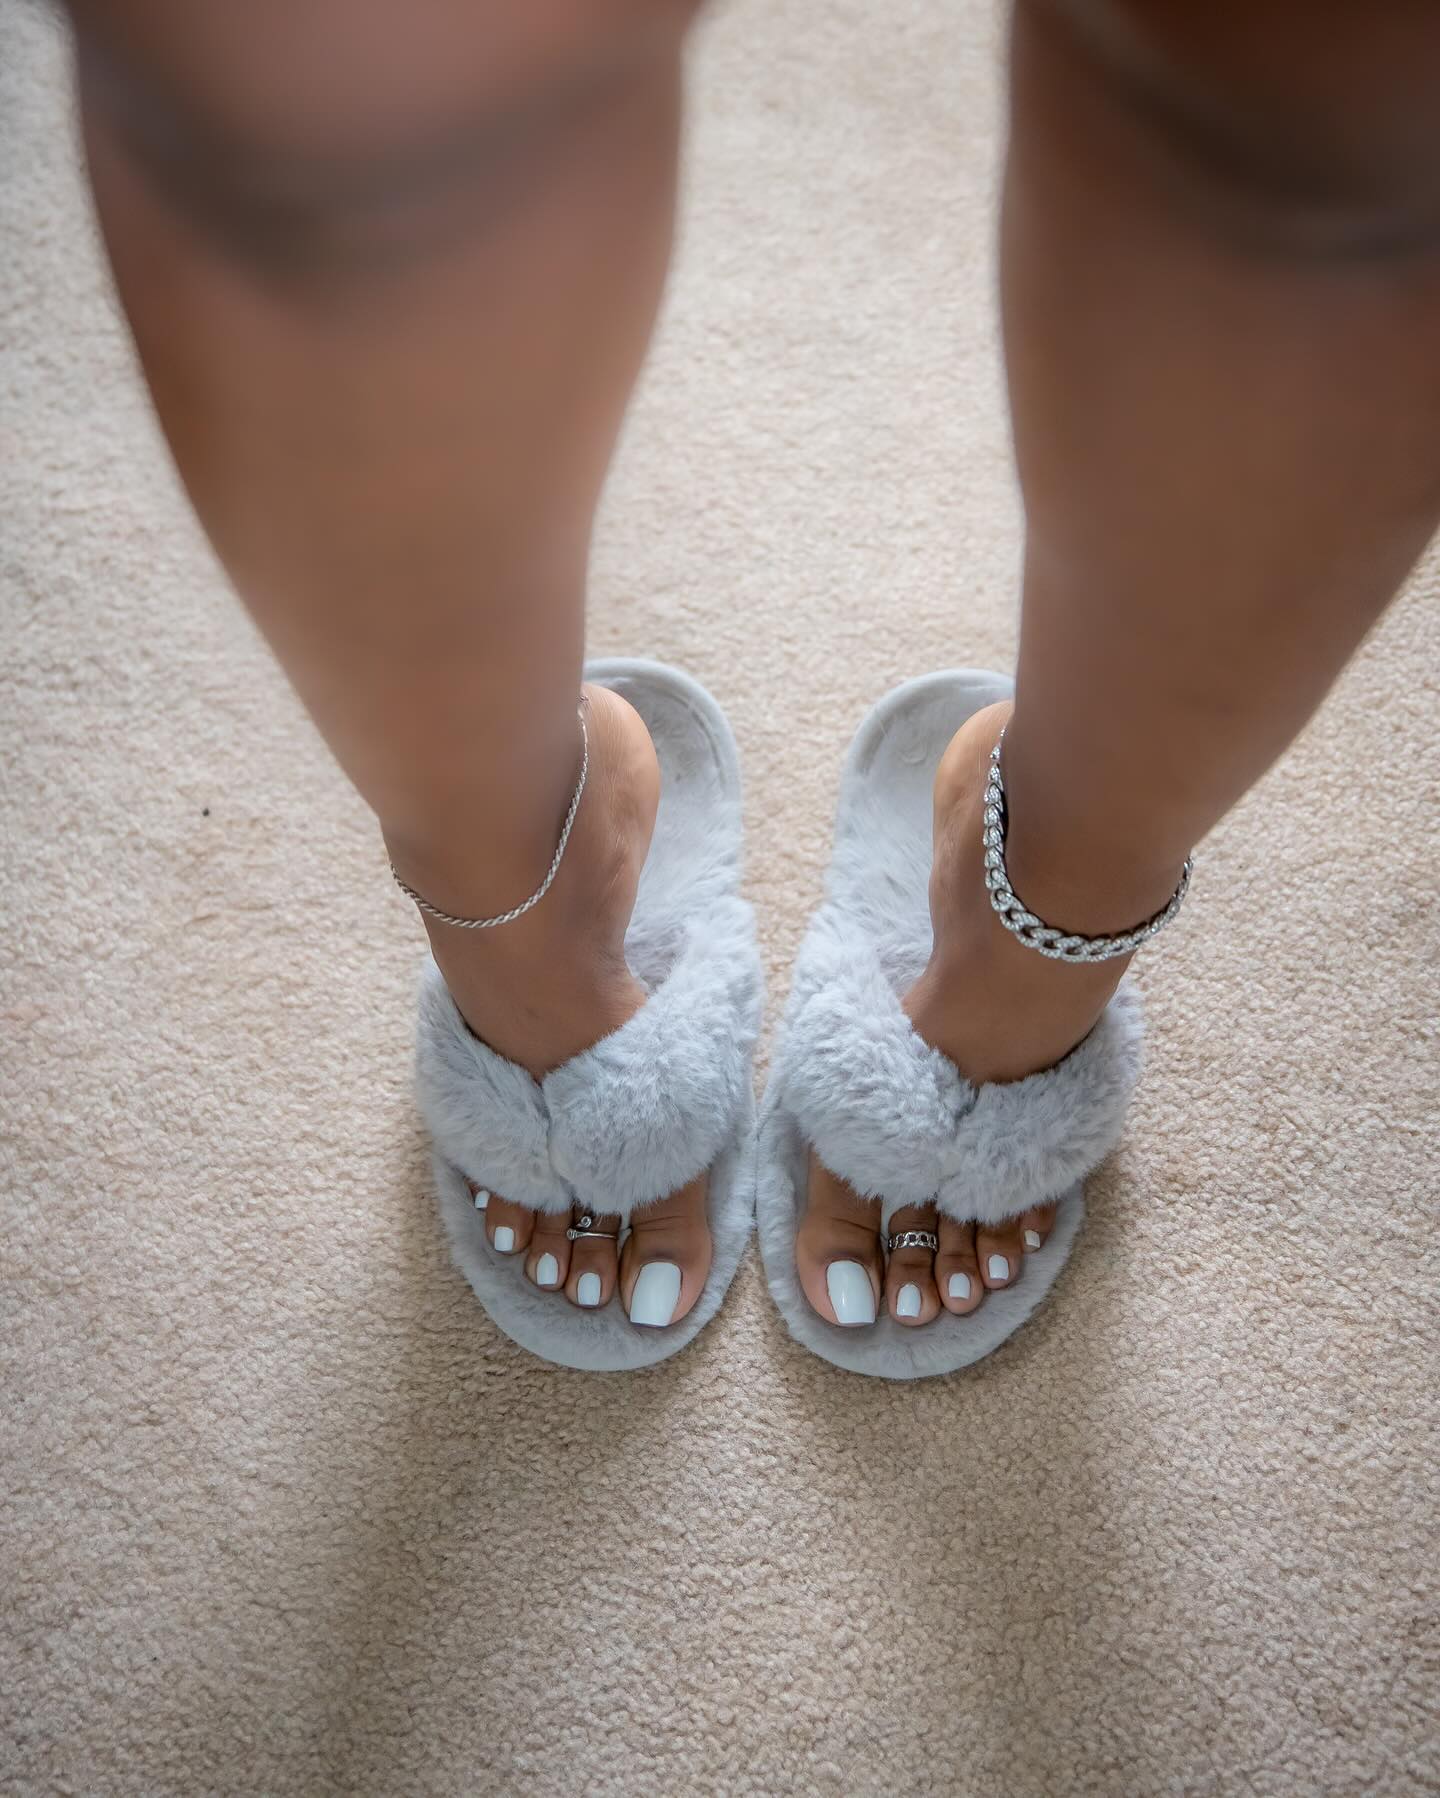 Slippers? Sock? Or Toe socks?! 🤍•
•
•
•
#sassytoes #pedicure #feetography #prettytoes #feetart #perfecttoes #perfectsoles #prettyfeetgang #toenails #pedicuredtoes #toenaildesigns #smartpedicure #nailsofinstagram #nailaddict #nailpolish #nailpages #beautifulnails #explore #explorepage #nailcolors #whitenails #whitetoes #whitetoenails #whitepolish #whitenailsdesign #whitepedicure #whitetoenails #whitenailpolish #nailcolorsonbrownskin #TeamWolfieWhite #wolfpack